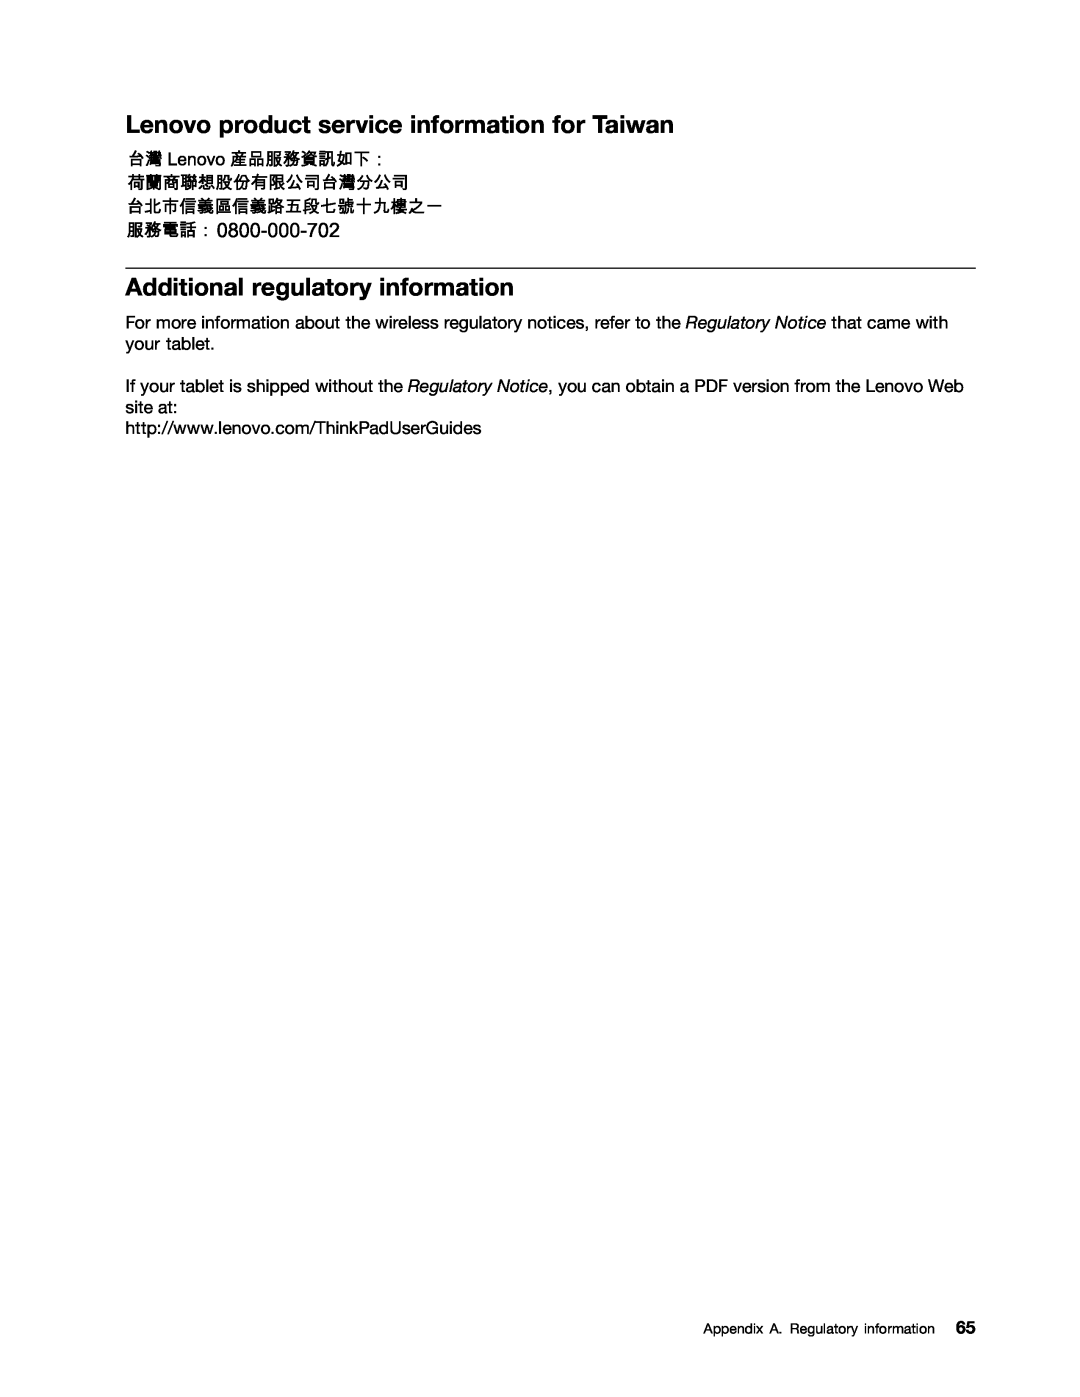 Lenovo 37023SU, 36984UU, 36984RU, 369724U Lenovo product service information for Taiwan, Additional regulatory information 